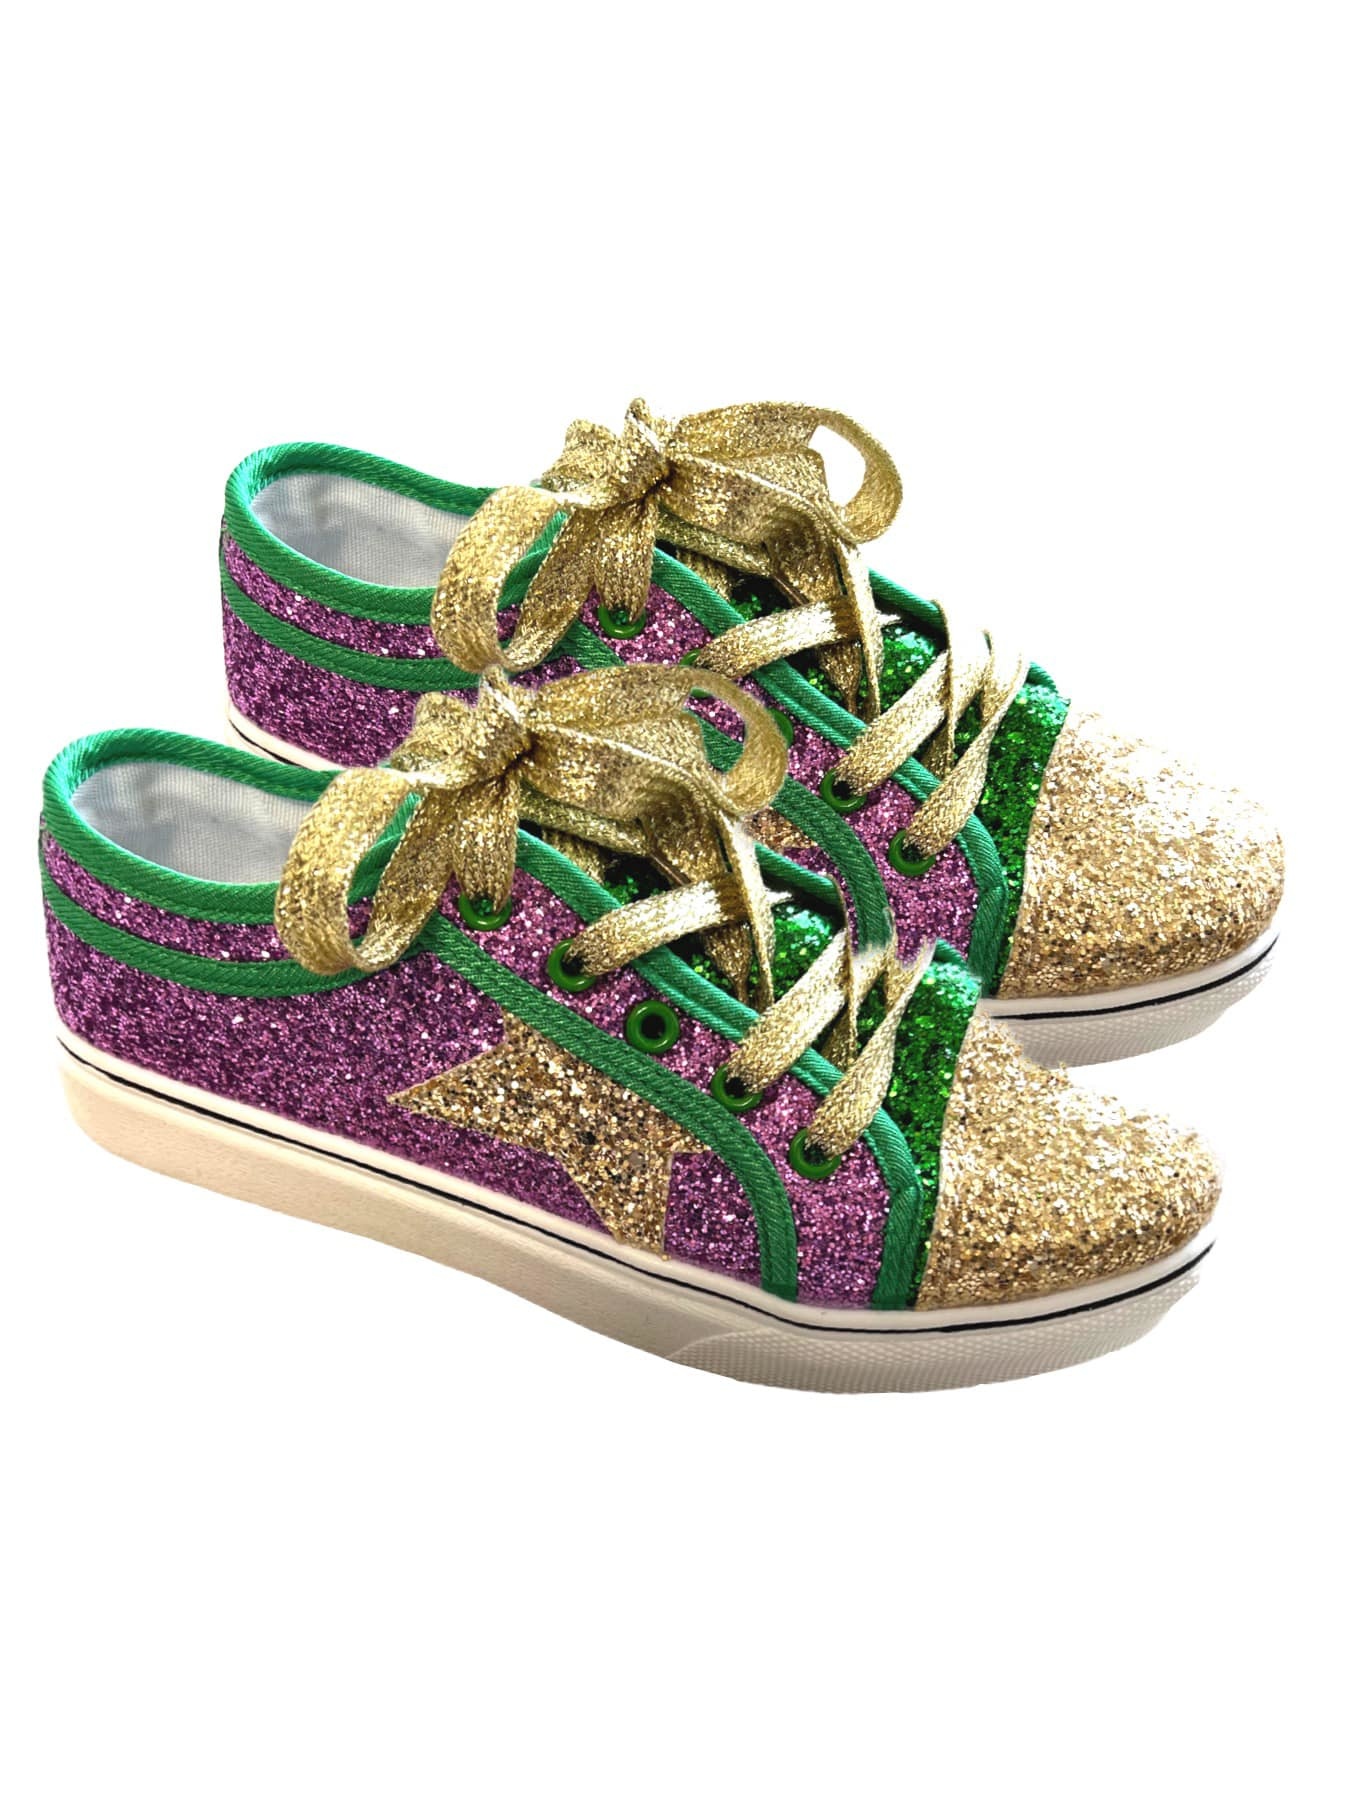 Mardi Gras Glitter Shoes - Fleurty Girl